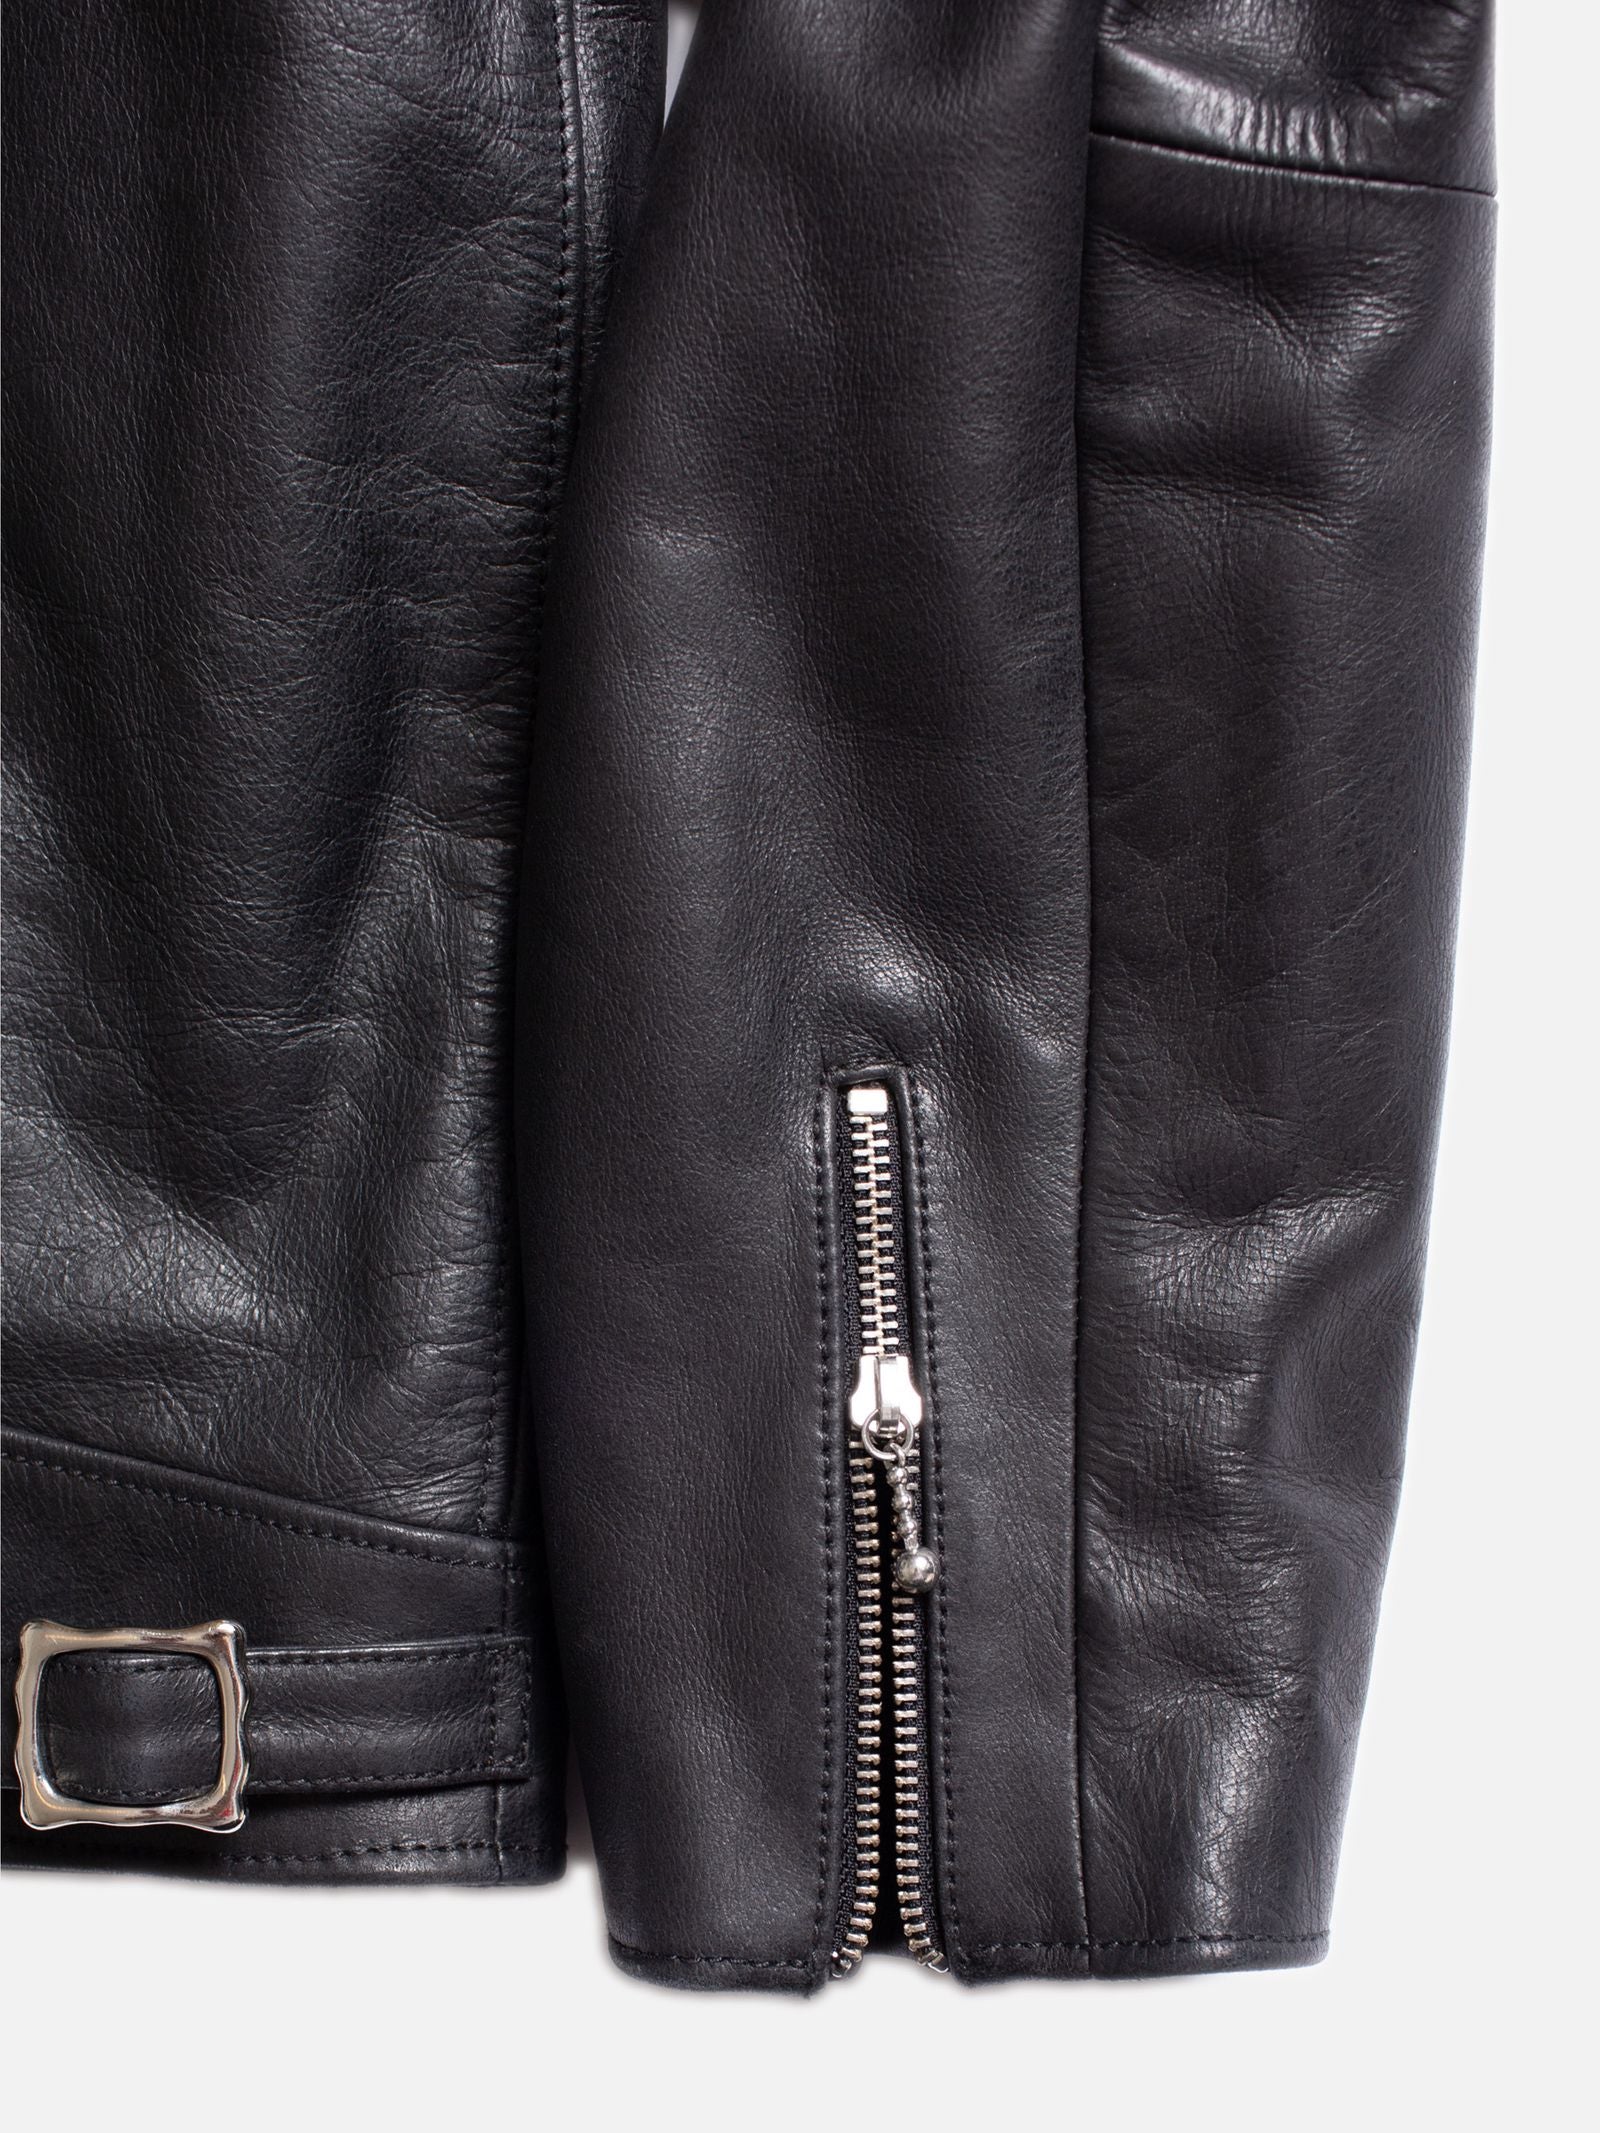 Eddy Rider Leather Jacket